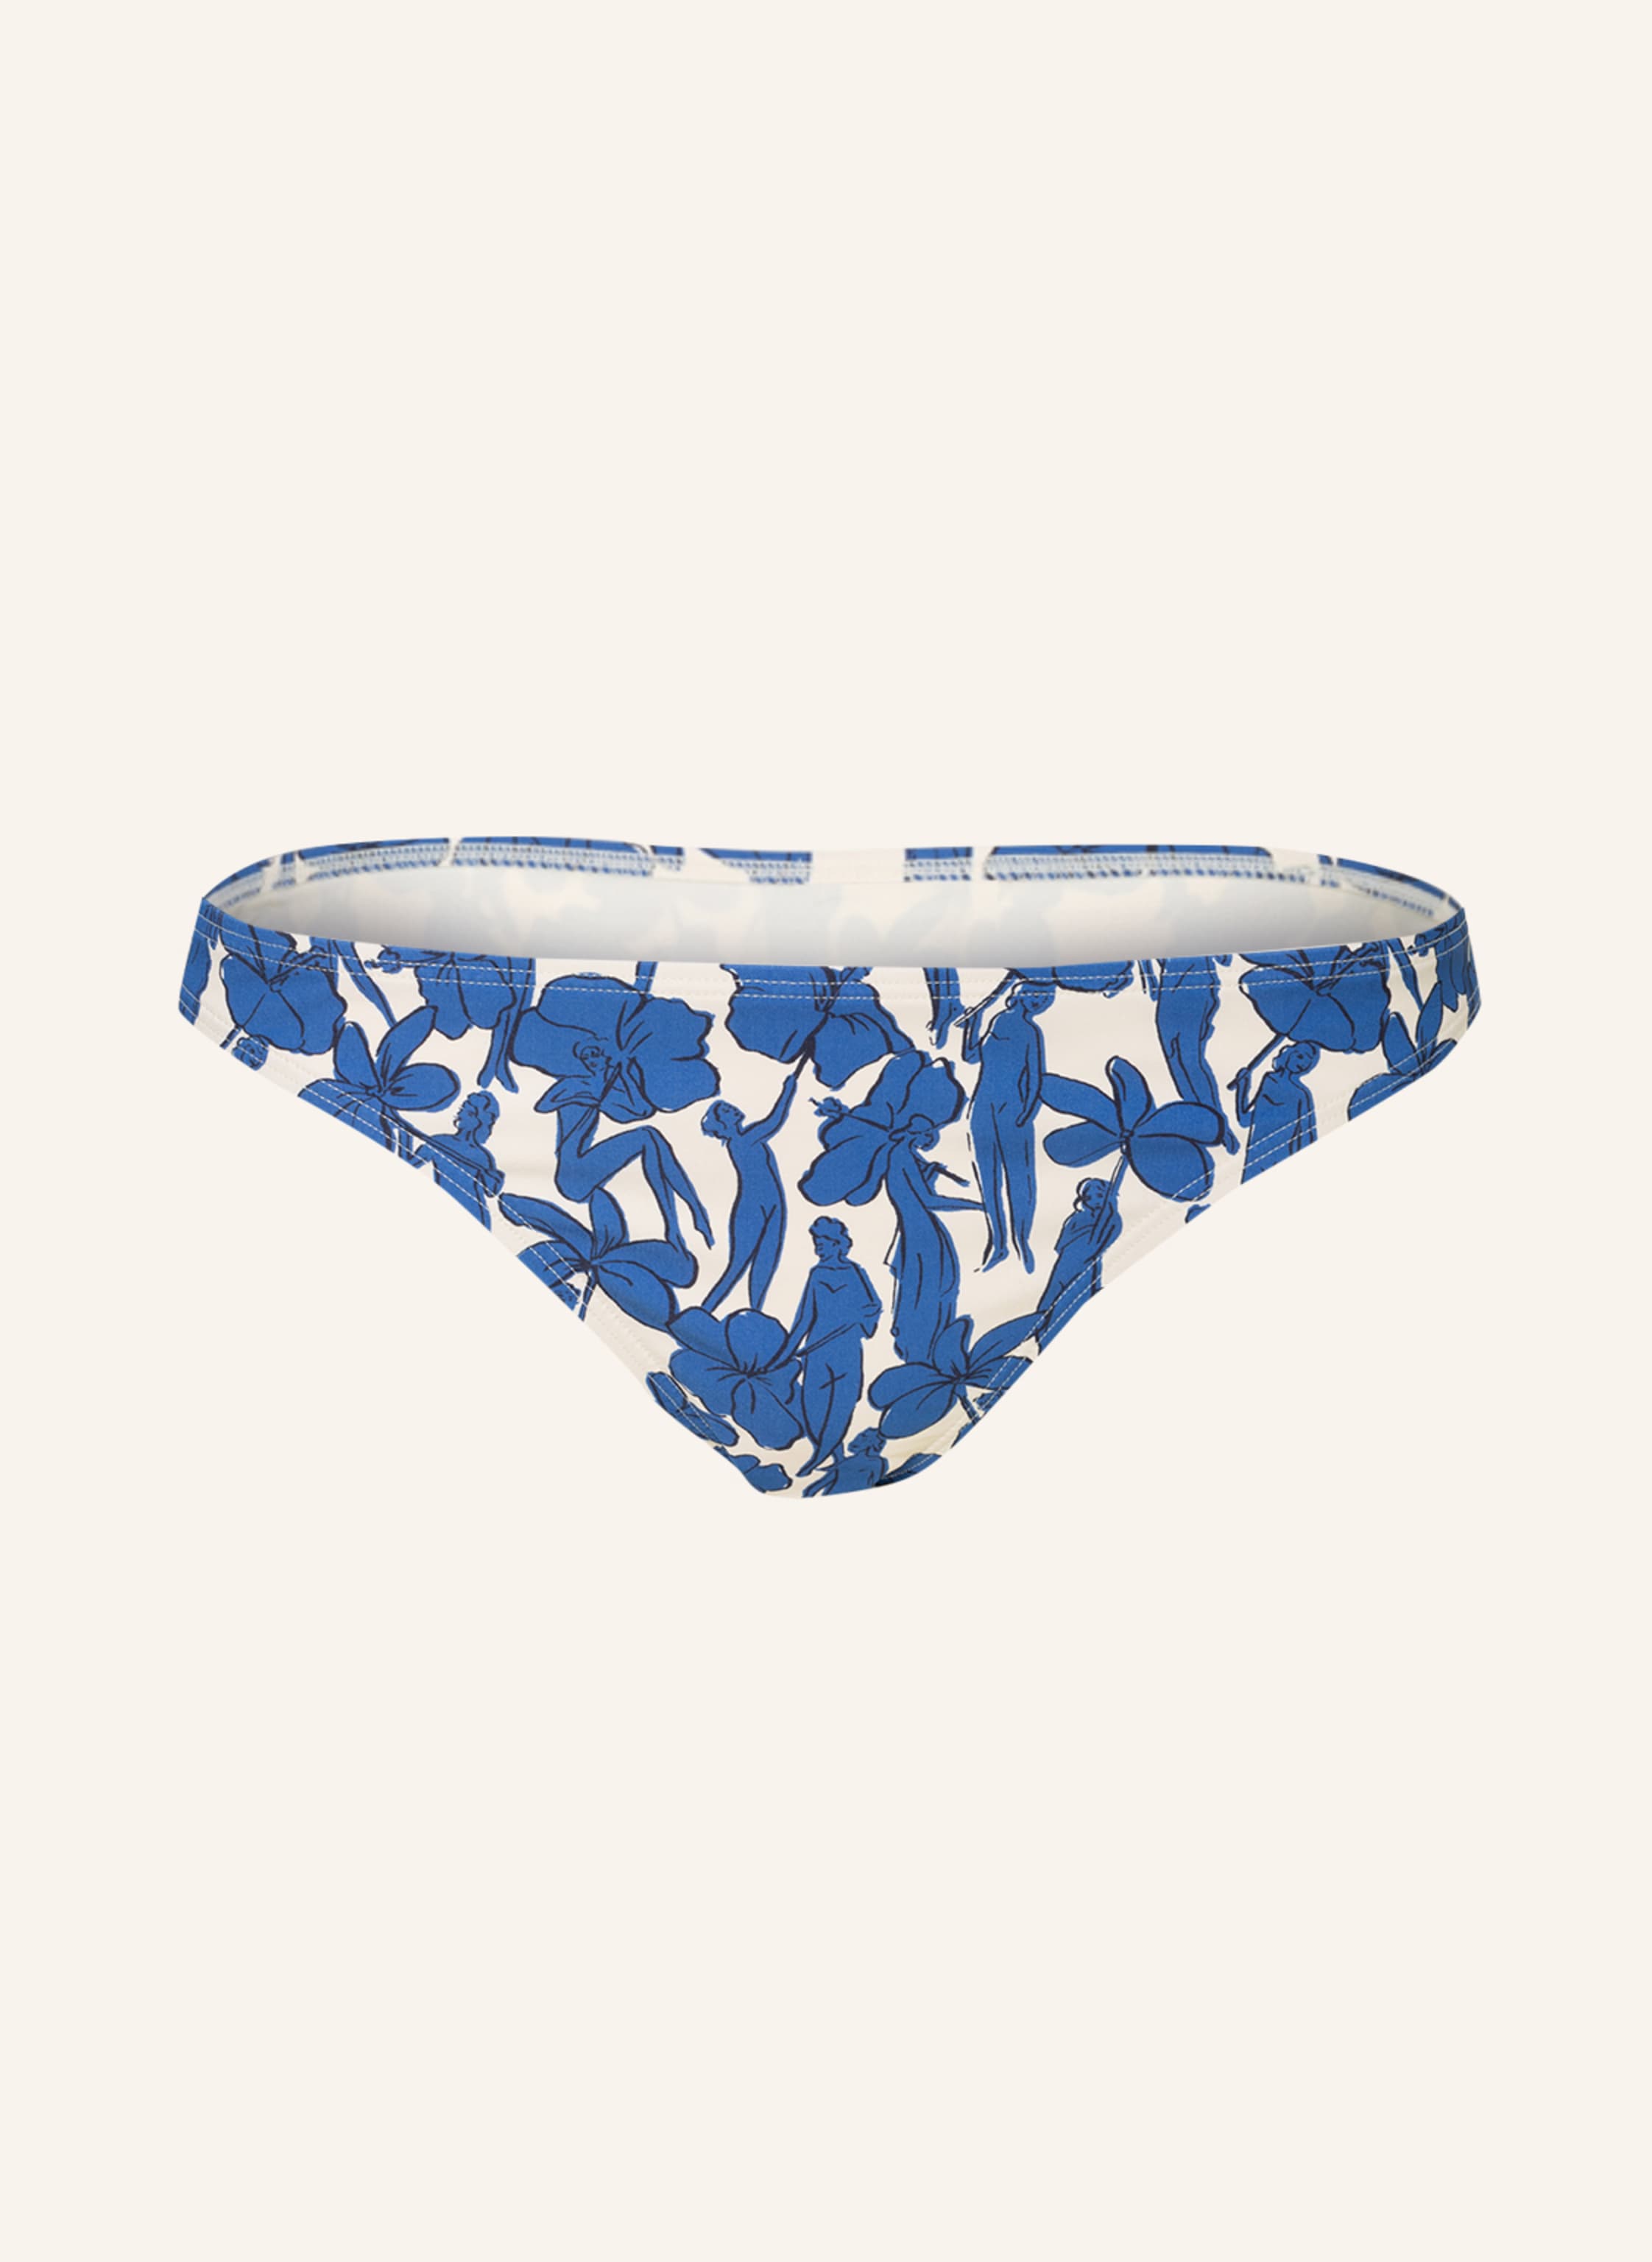 TORY BURCH Bikini bottoms in blue/ cream | Breuninger